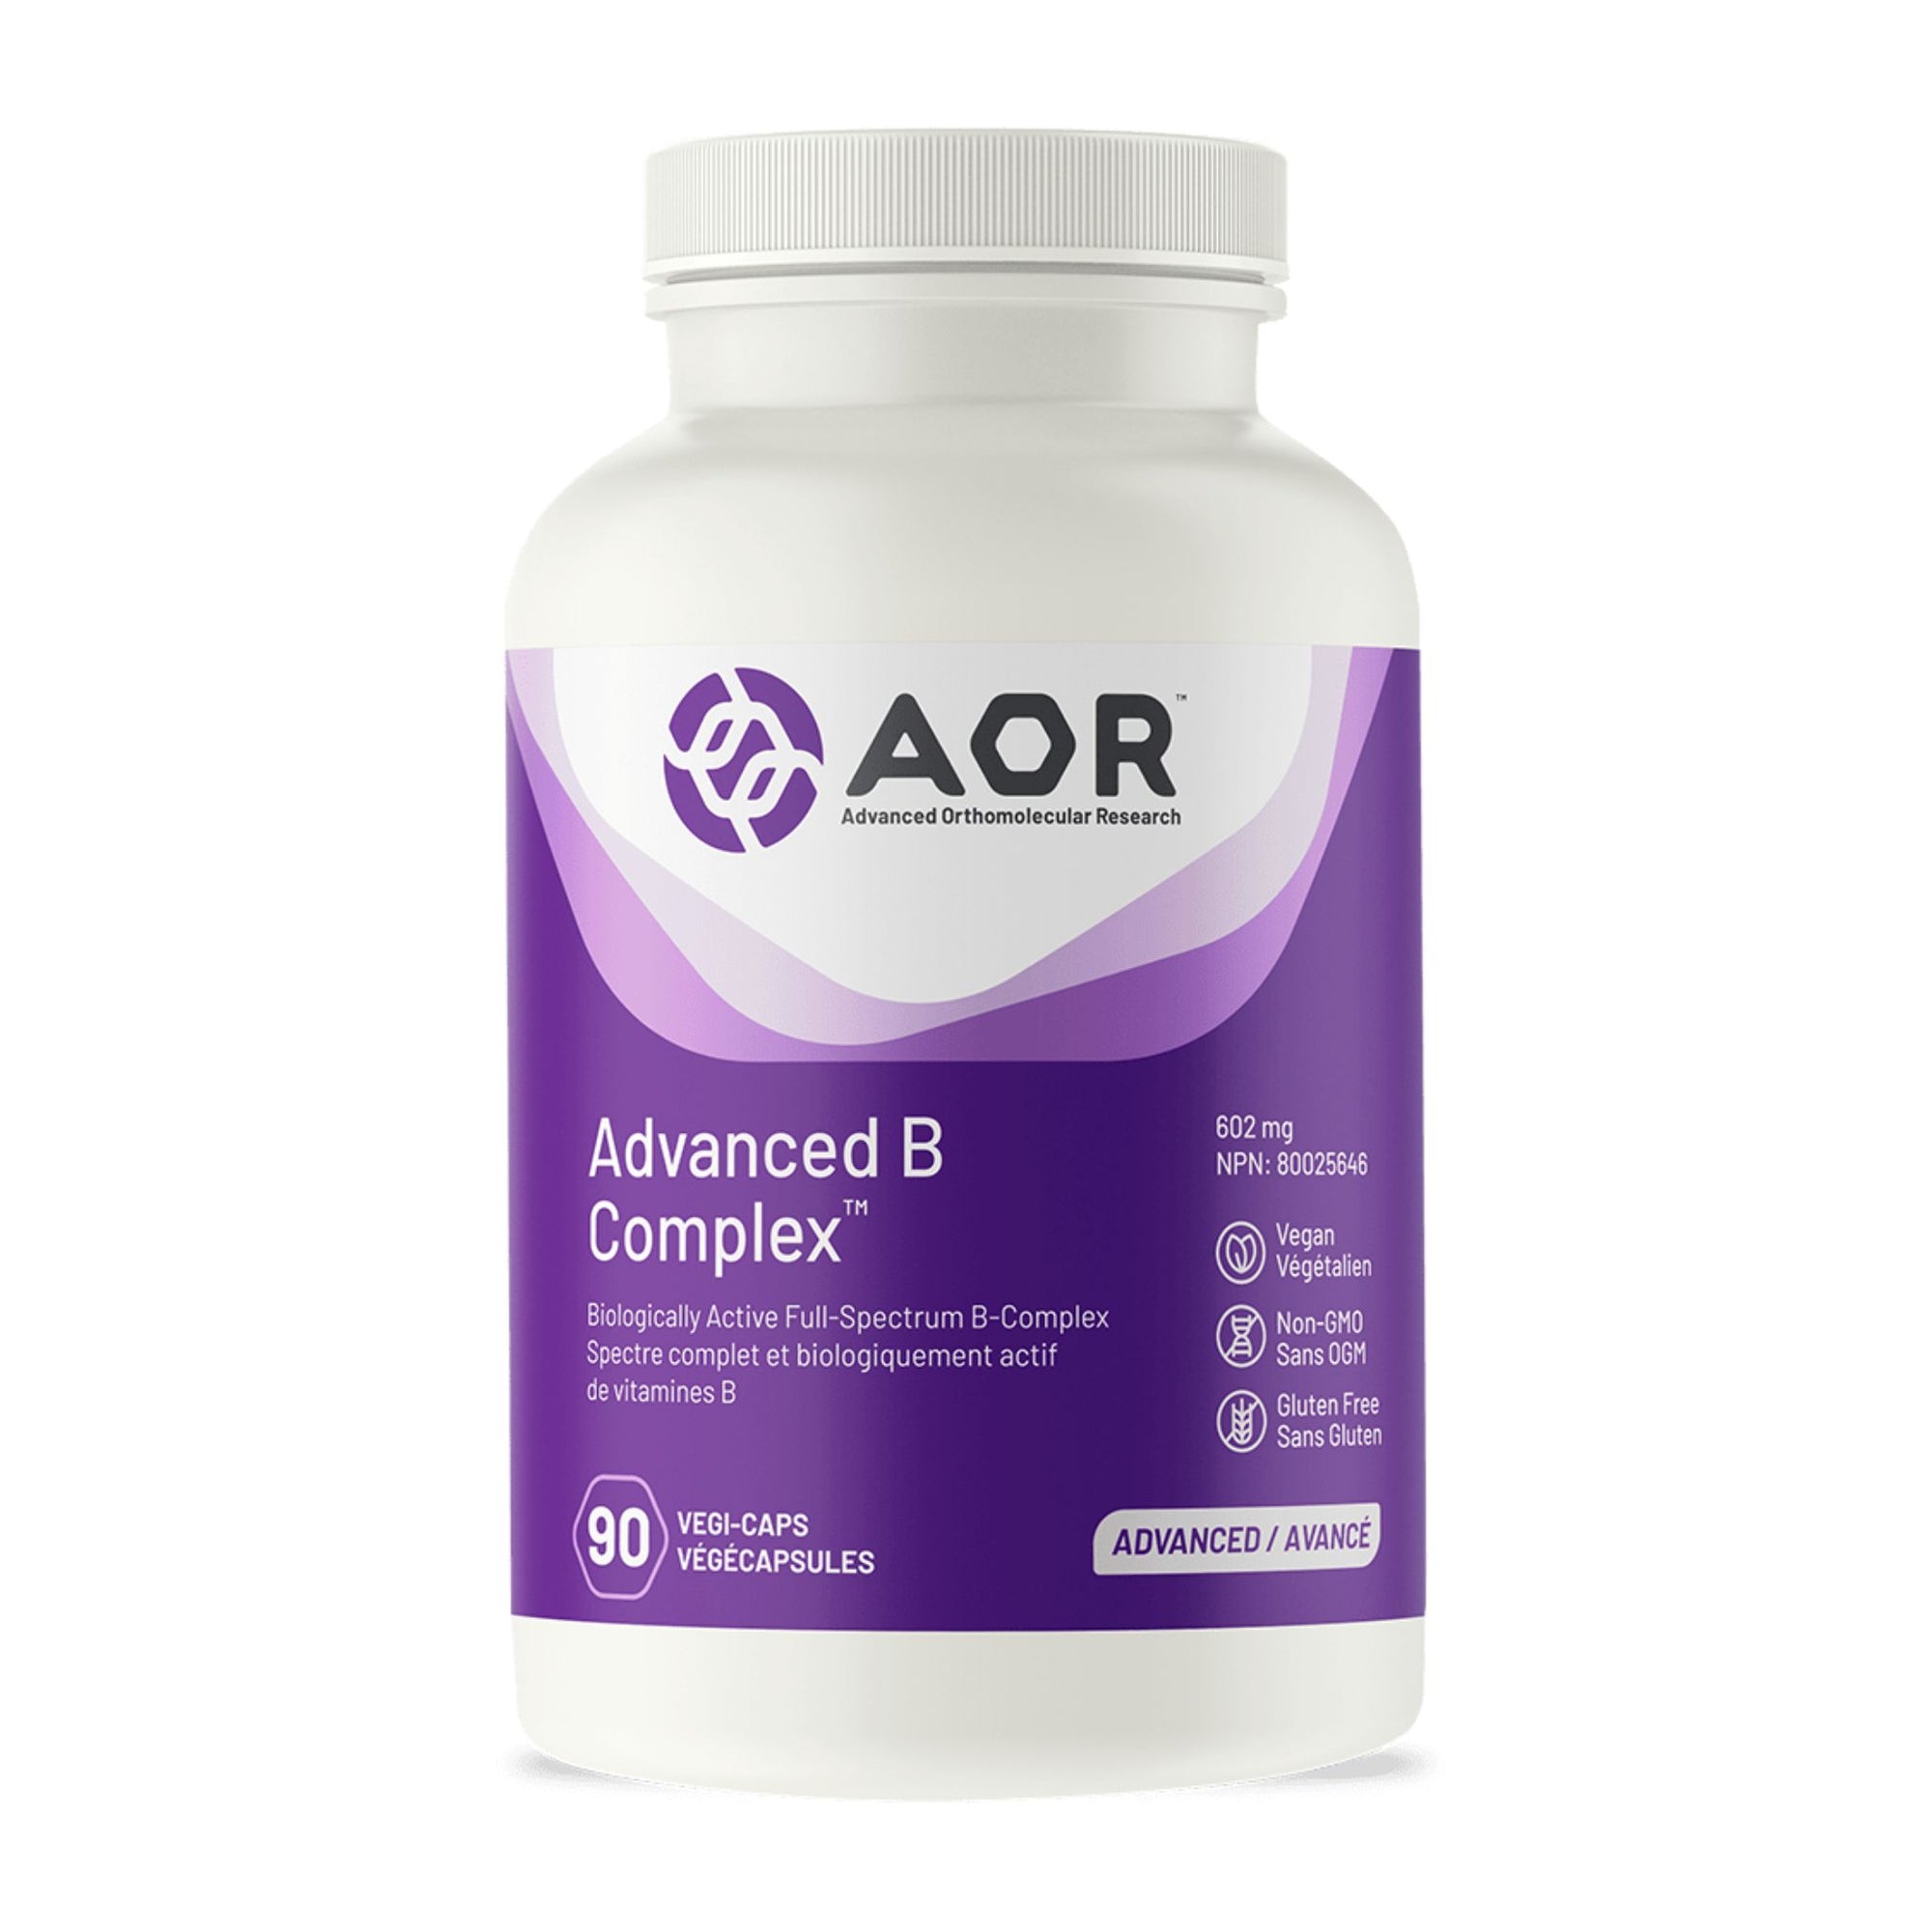 AOR Advanced B Complex 90 vegetable capsules - Biologically Active Full-Spectrum B-Complex - 602mg - Vegan, Non-GMO, Gluten Free 